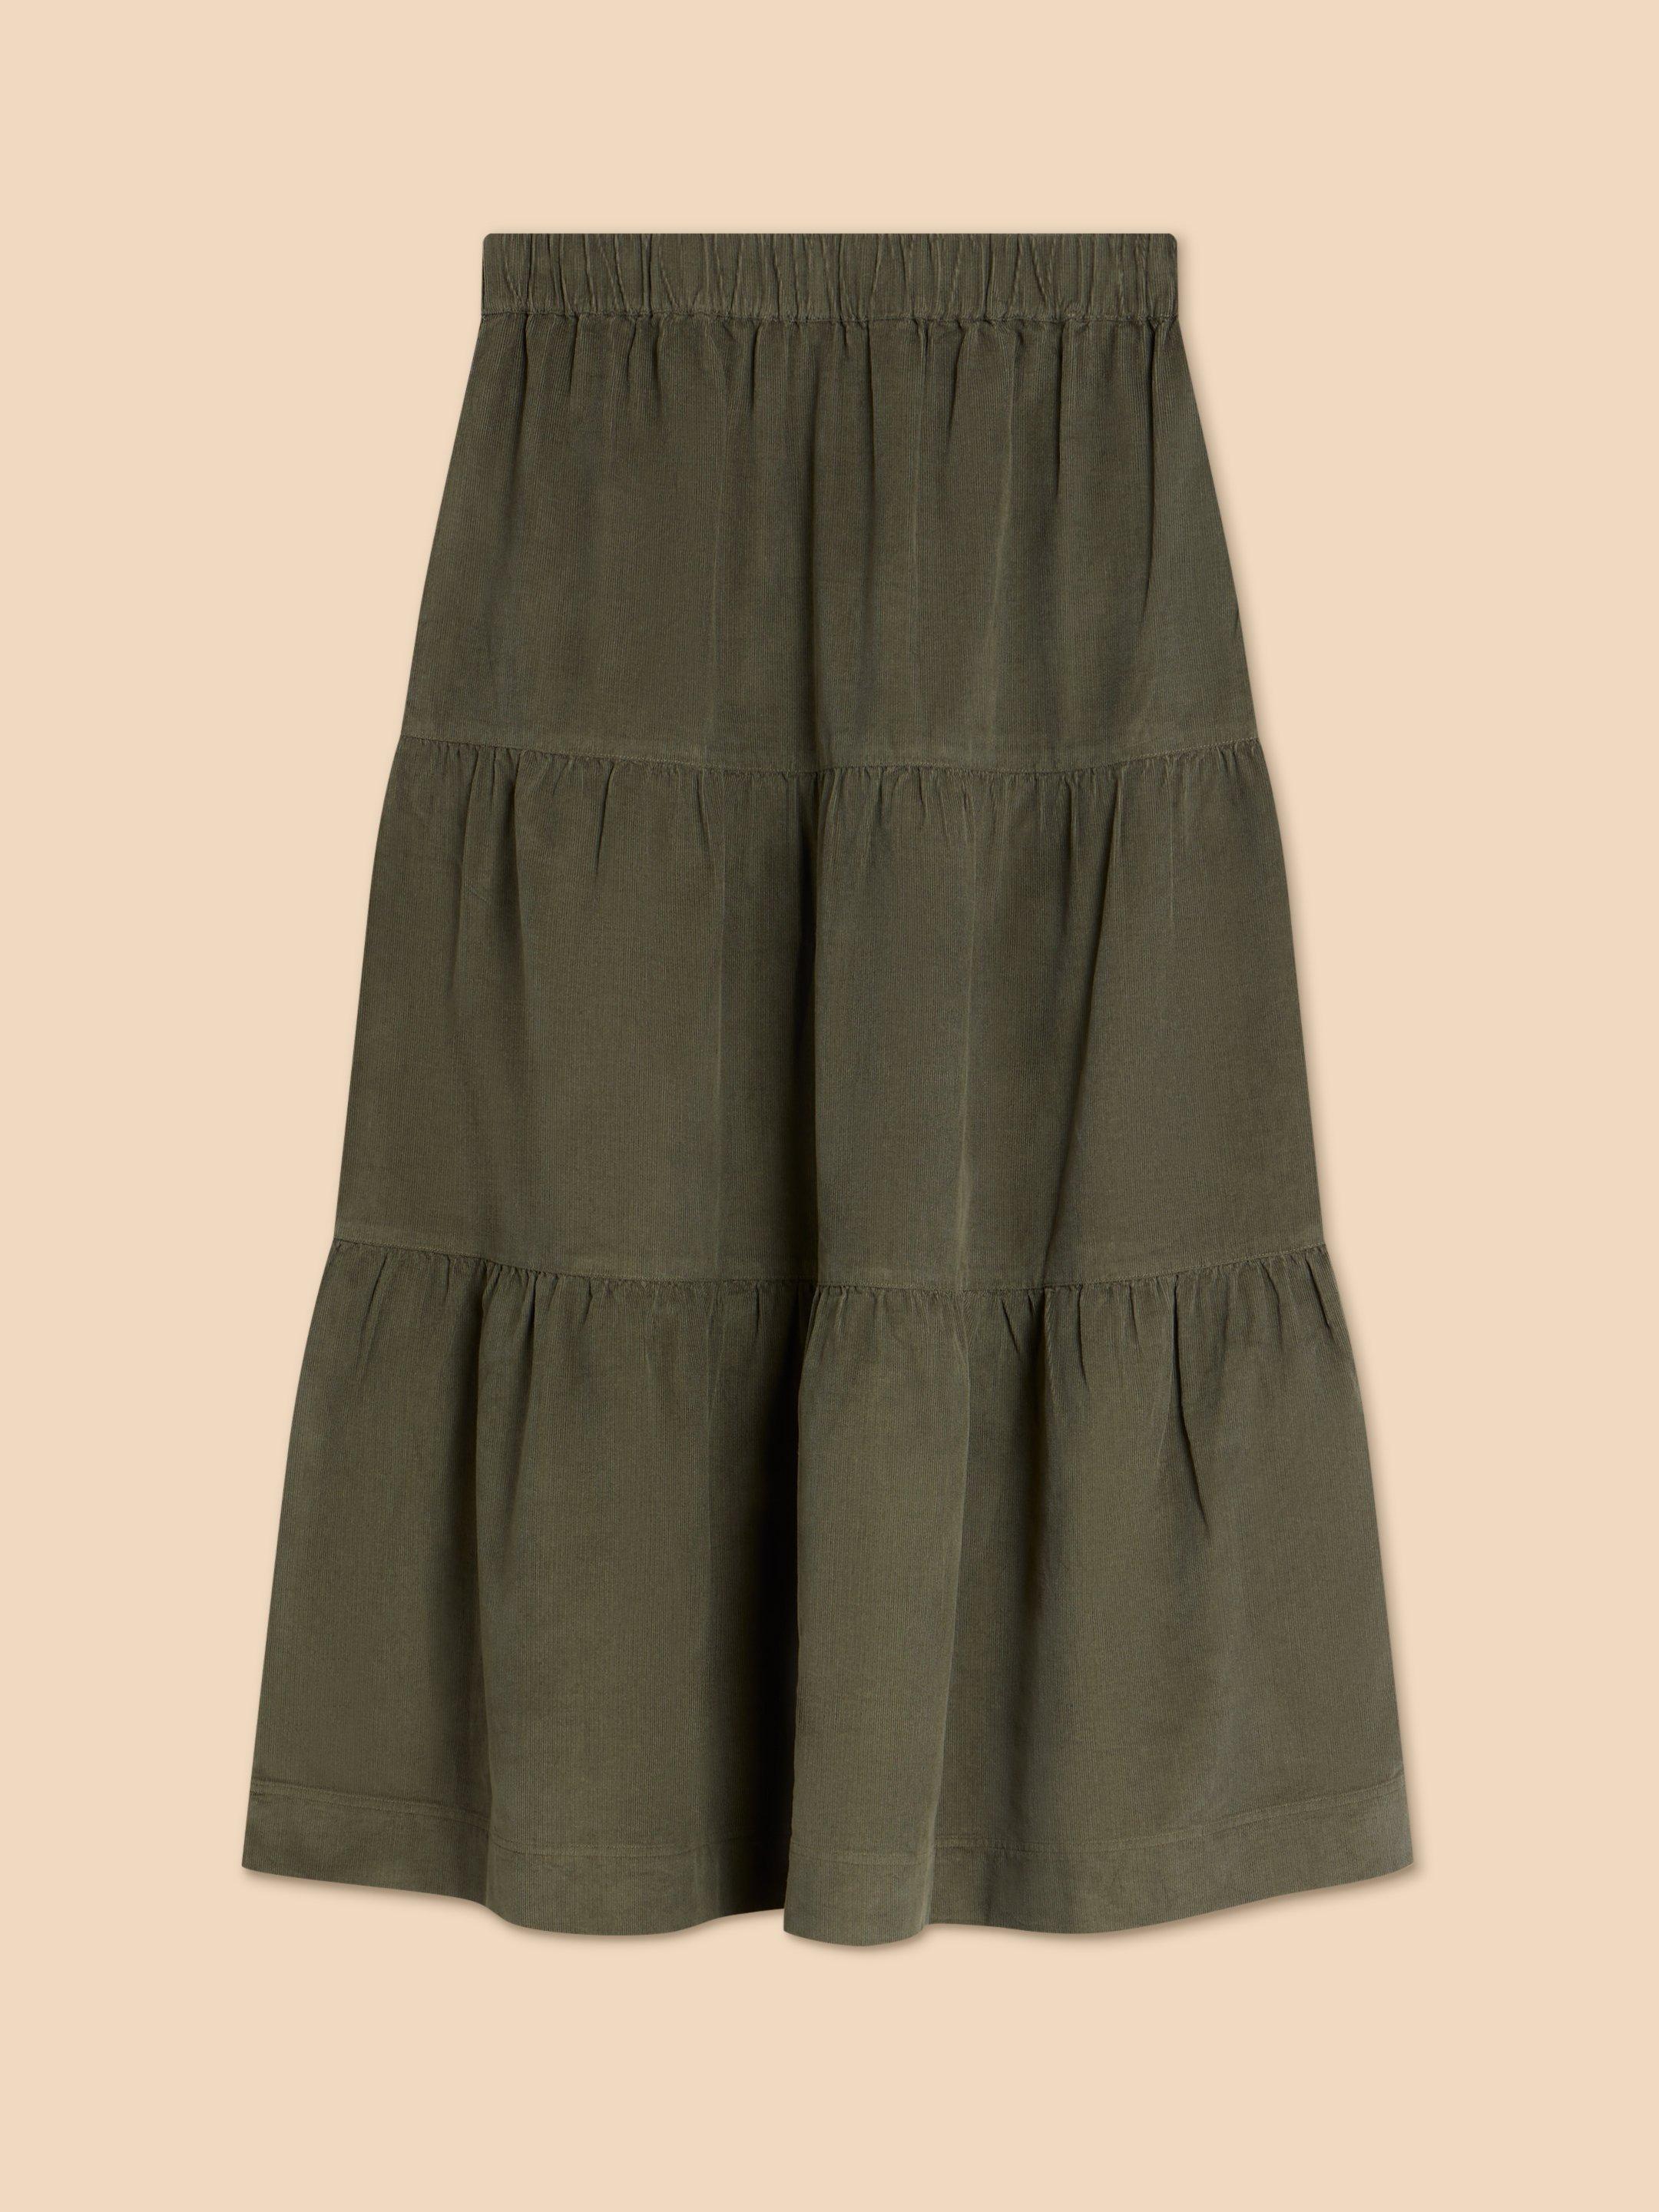 Jade Tiered Cord Skirt in KHAKI GRN - FLAT BACK